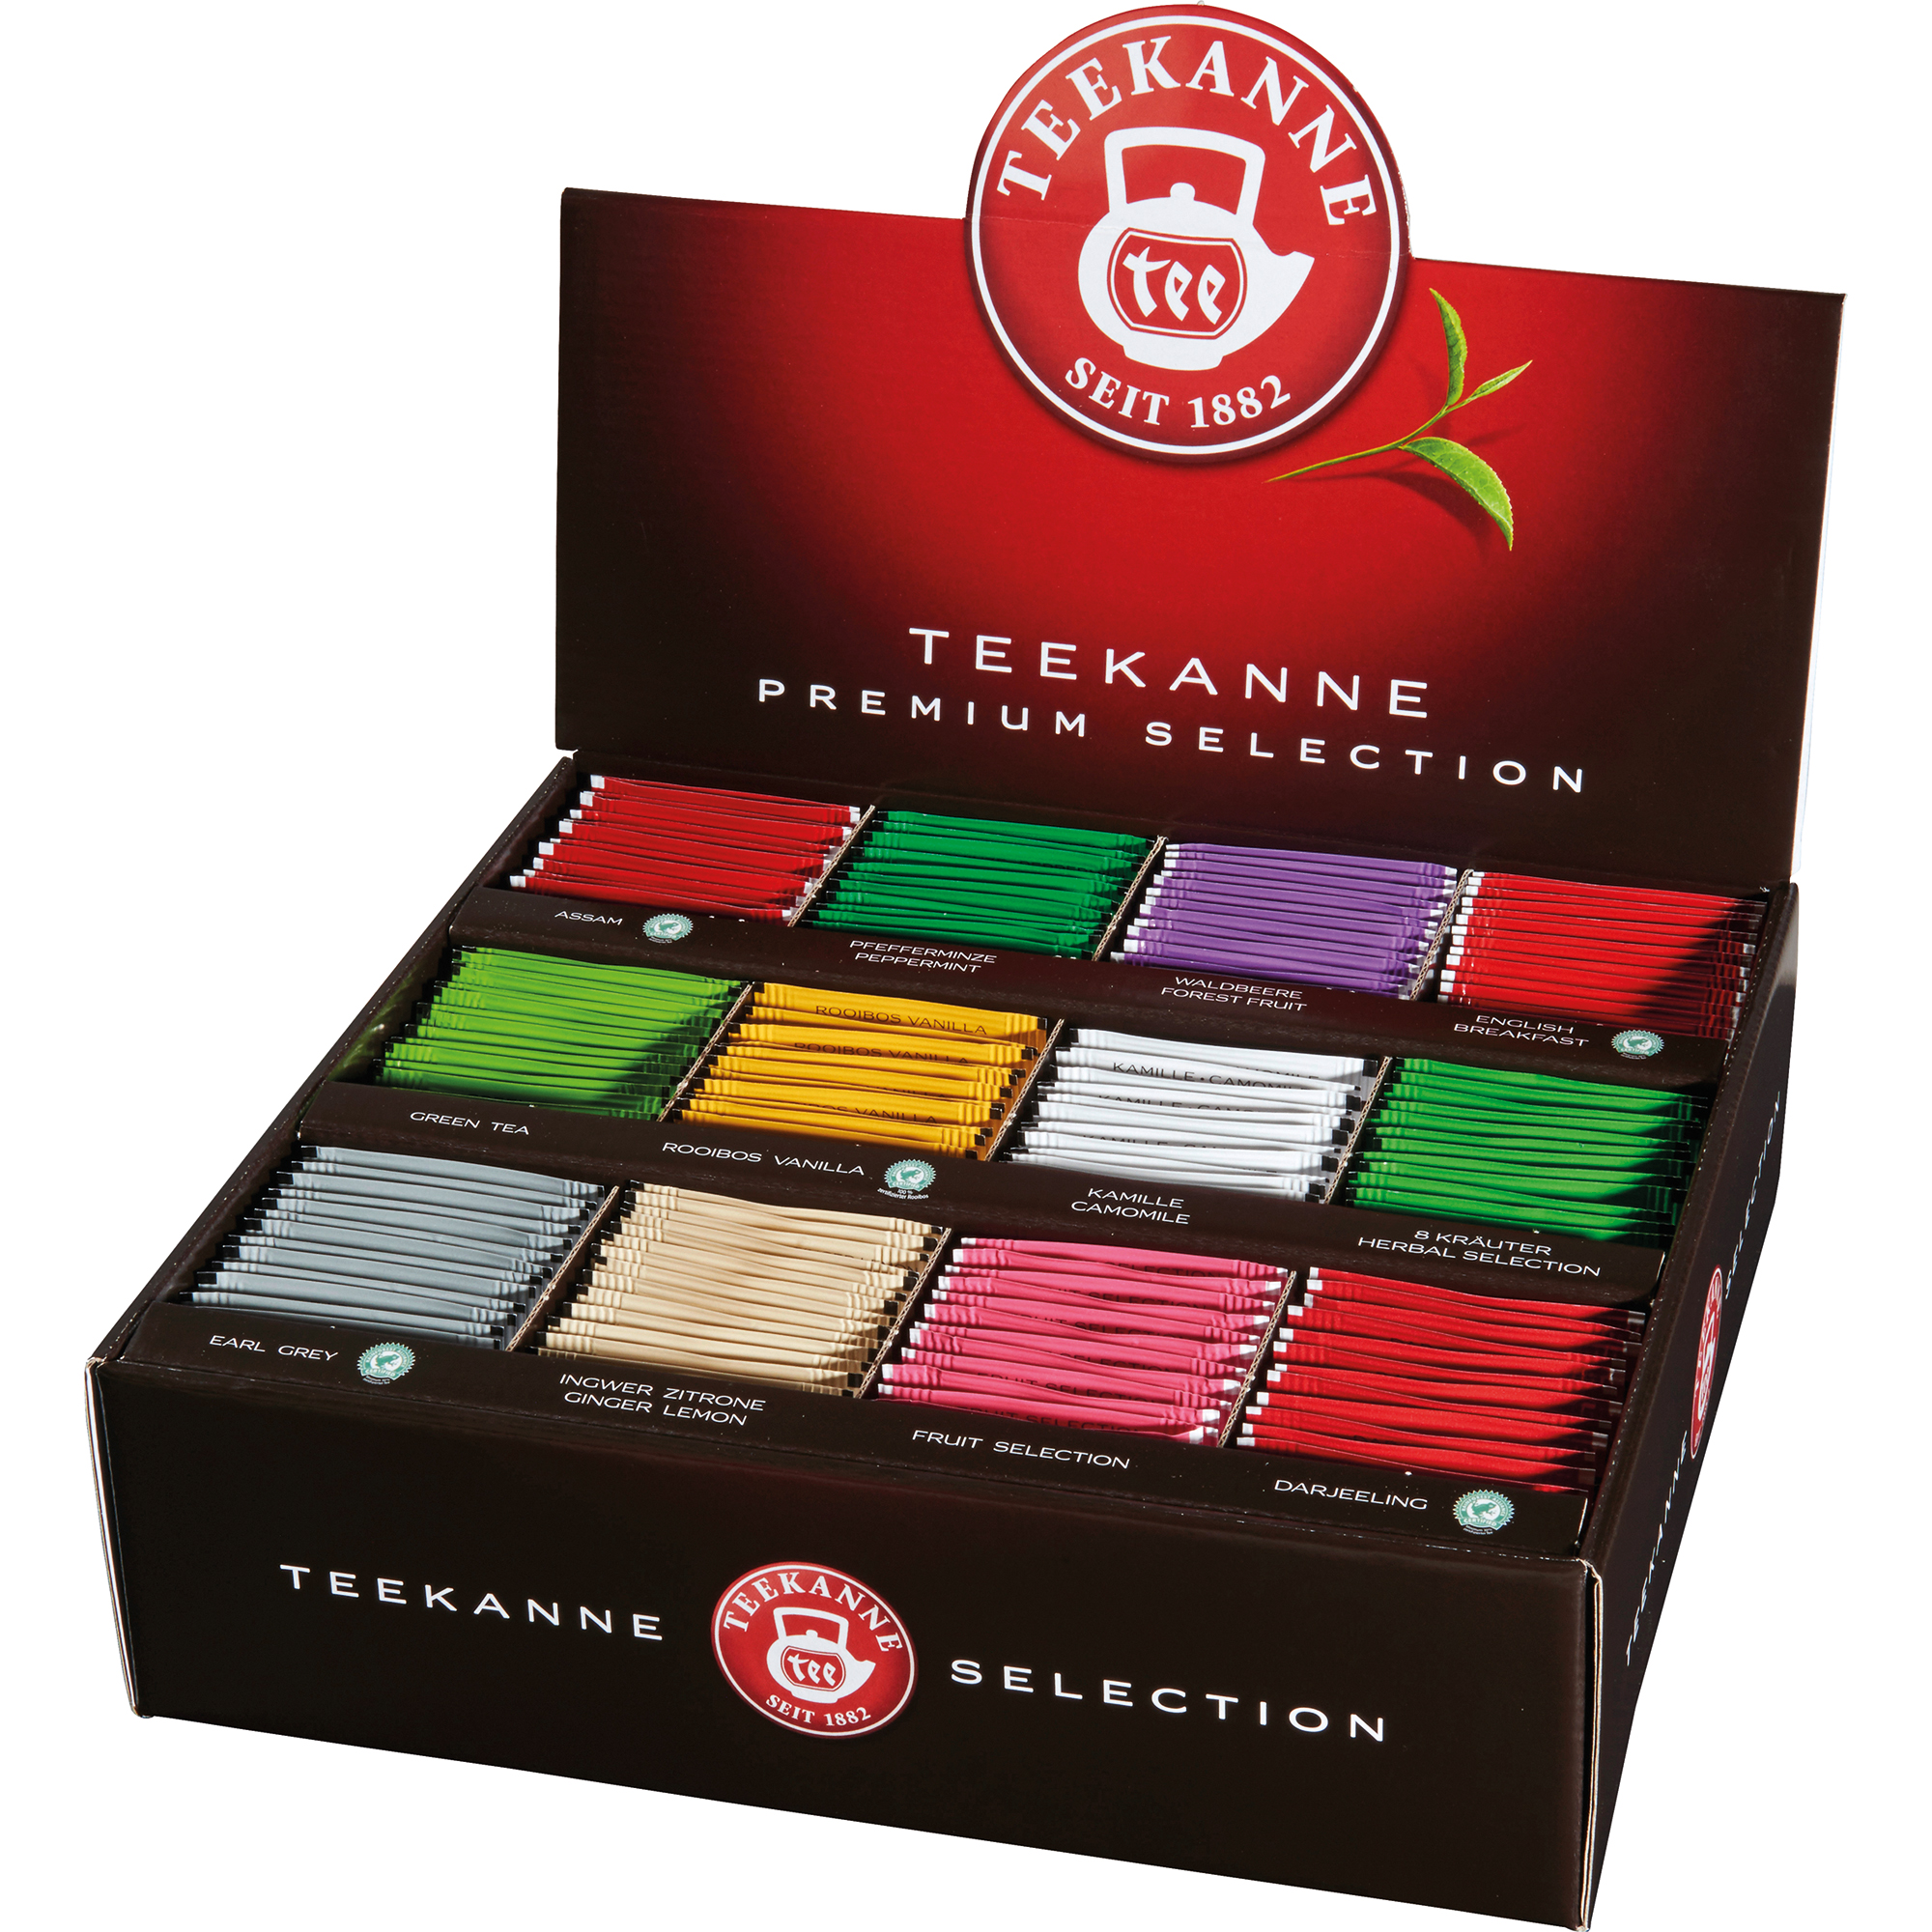 Teekanne Tee Gastro Premium Selectionbox